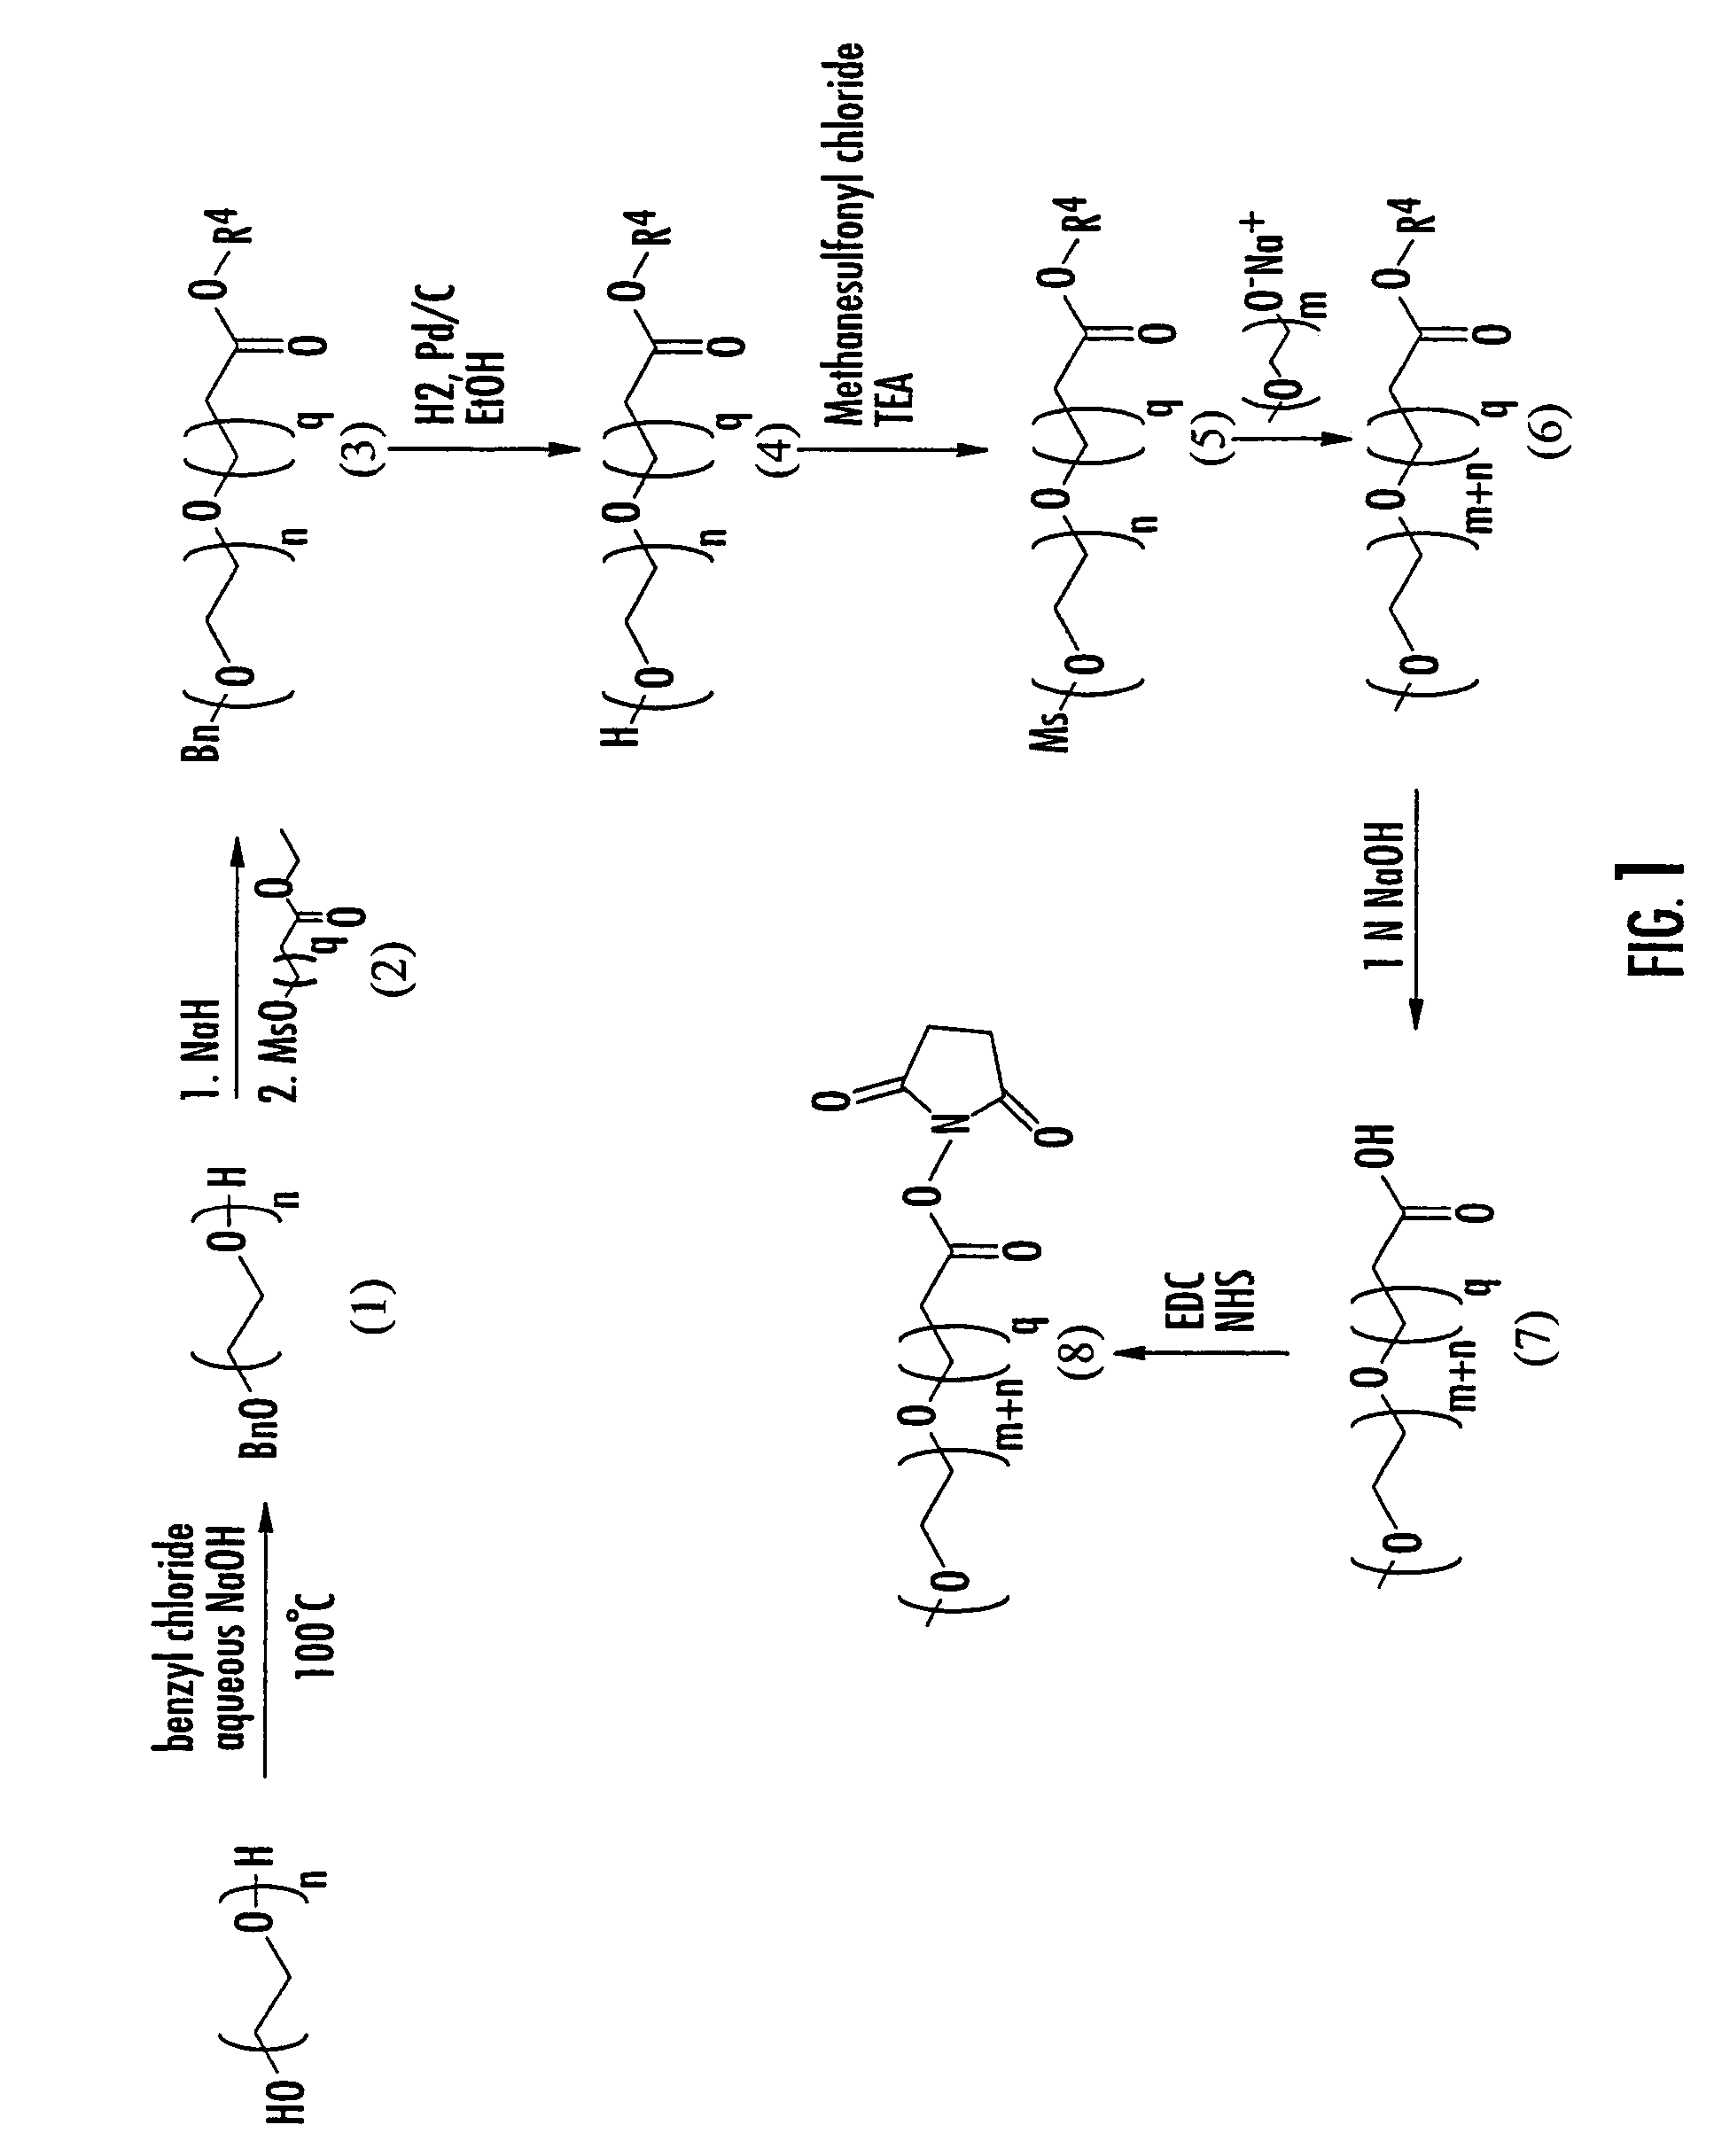 Mixtures of insulin drug-oligomer comprising polyalkylene glycol